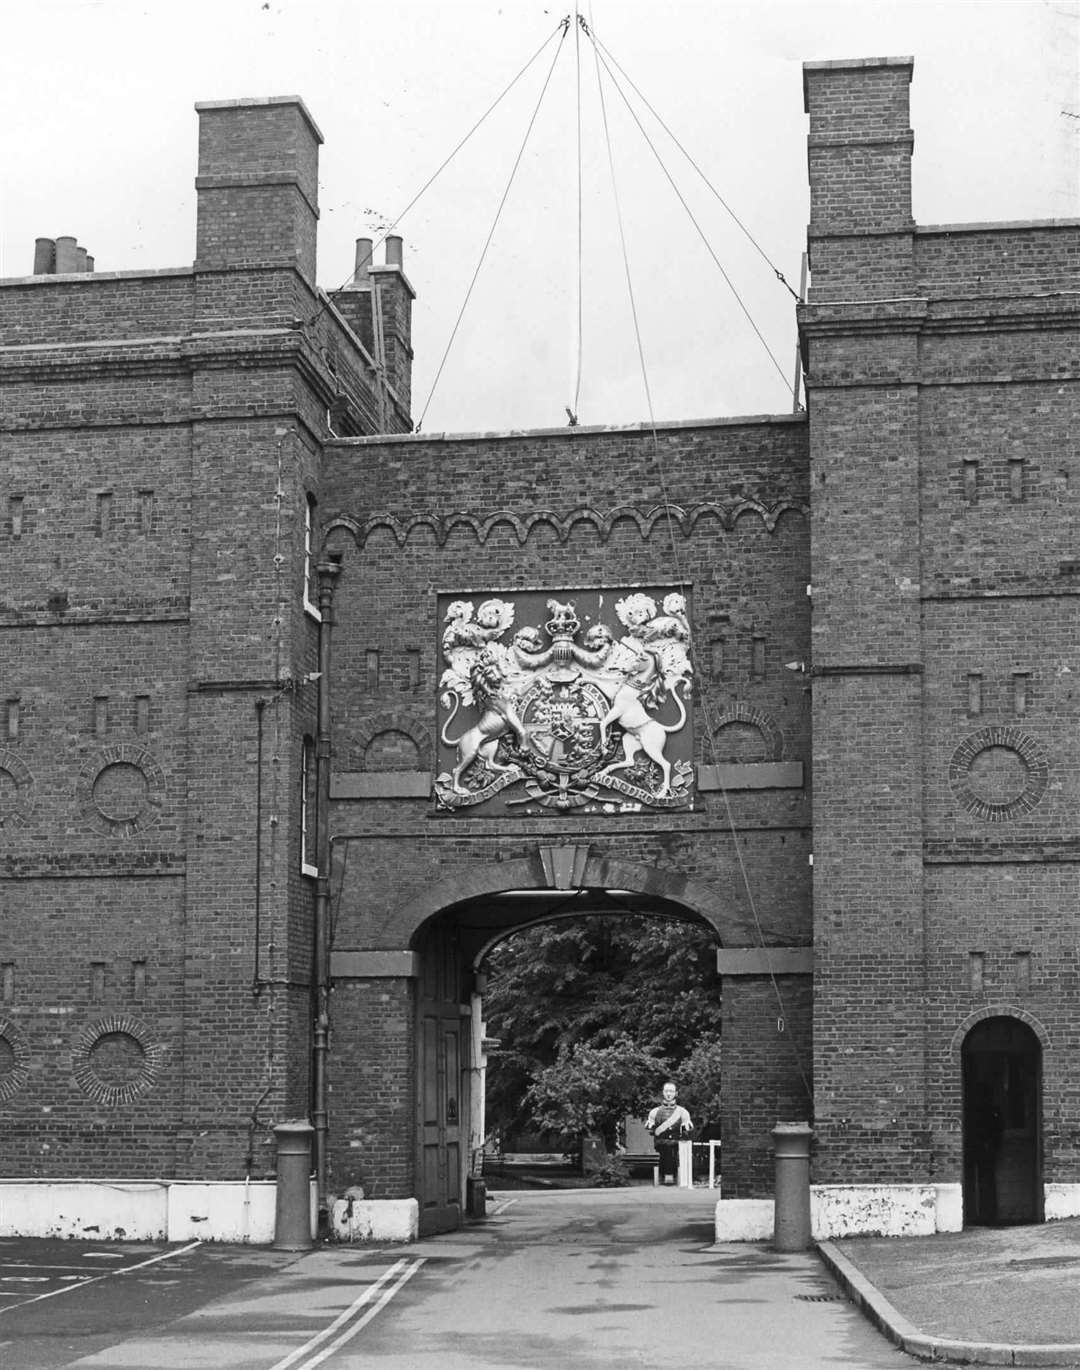 Chatham Historic Dockyard's imposing Main Gate